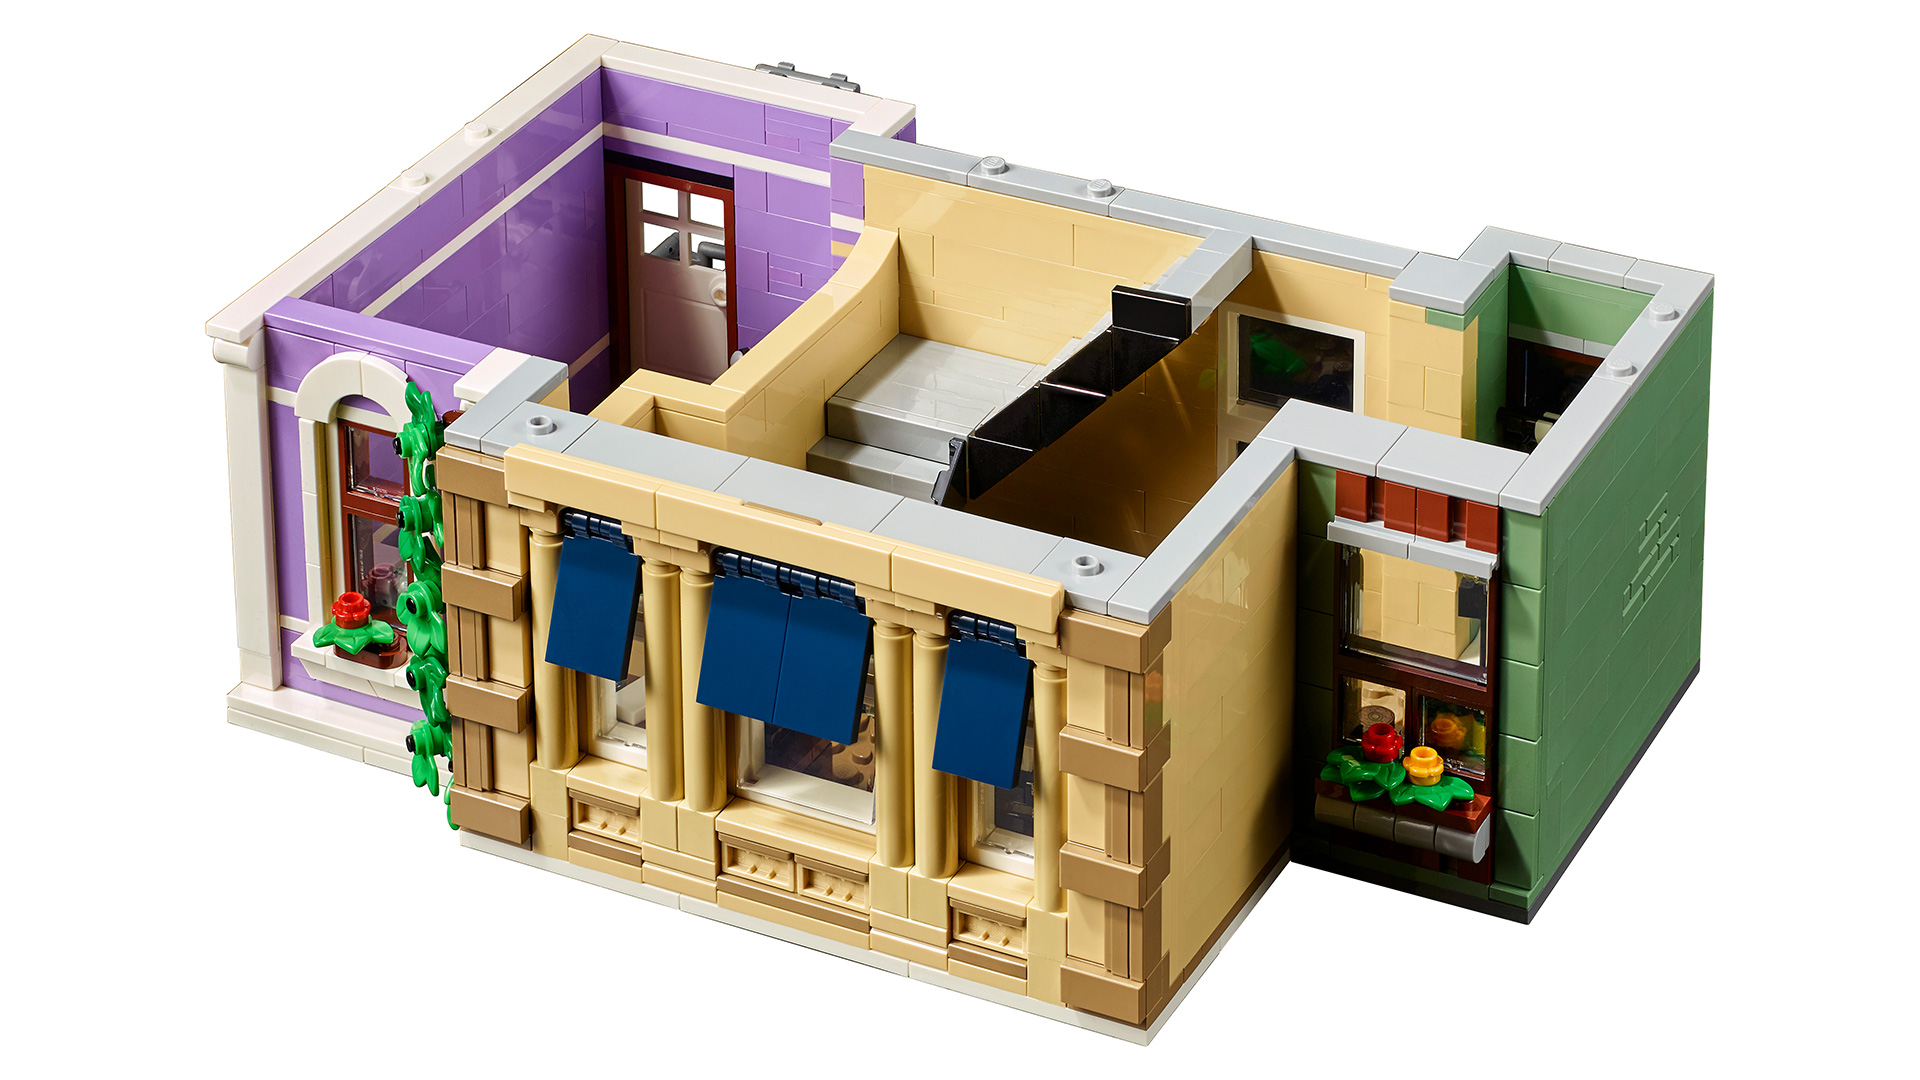 LEGO 10278 – Police Station